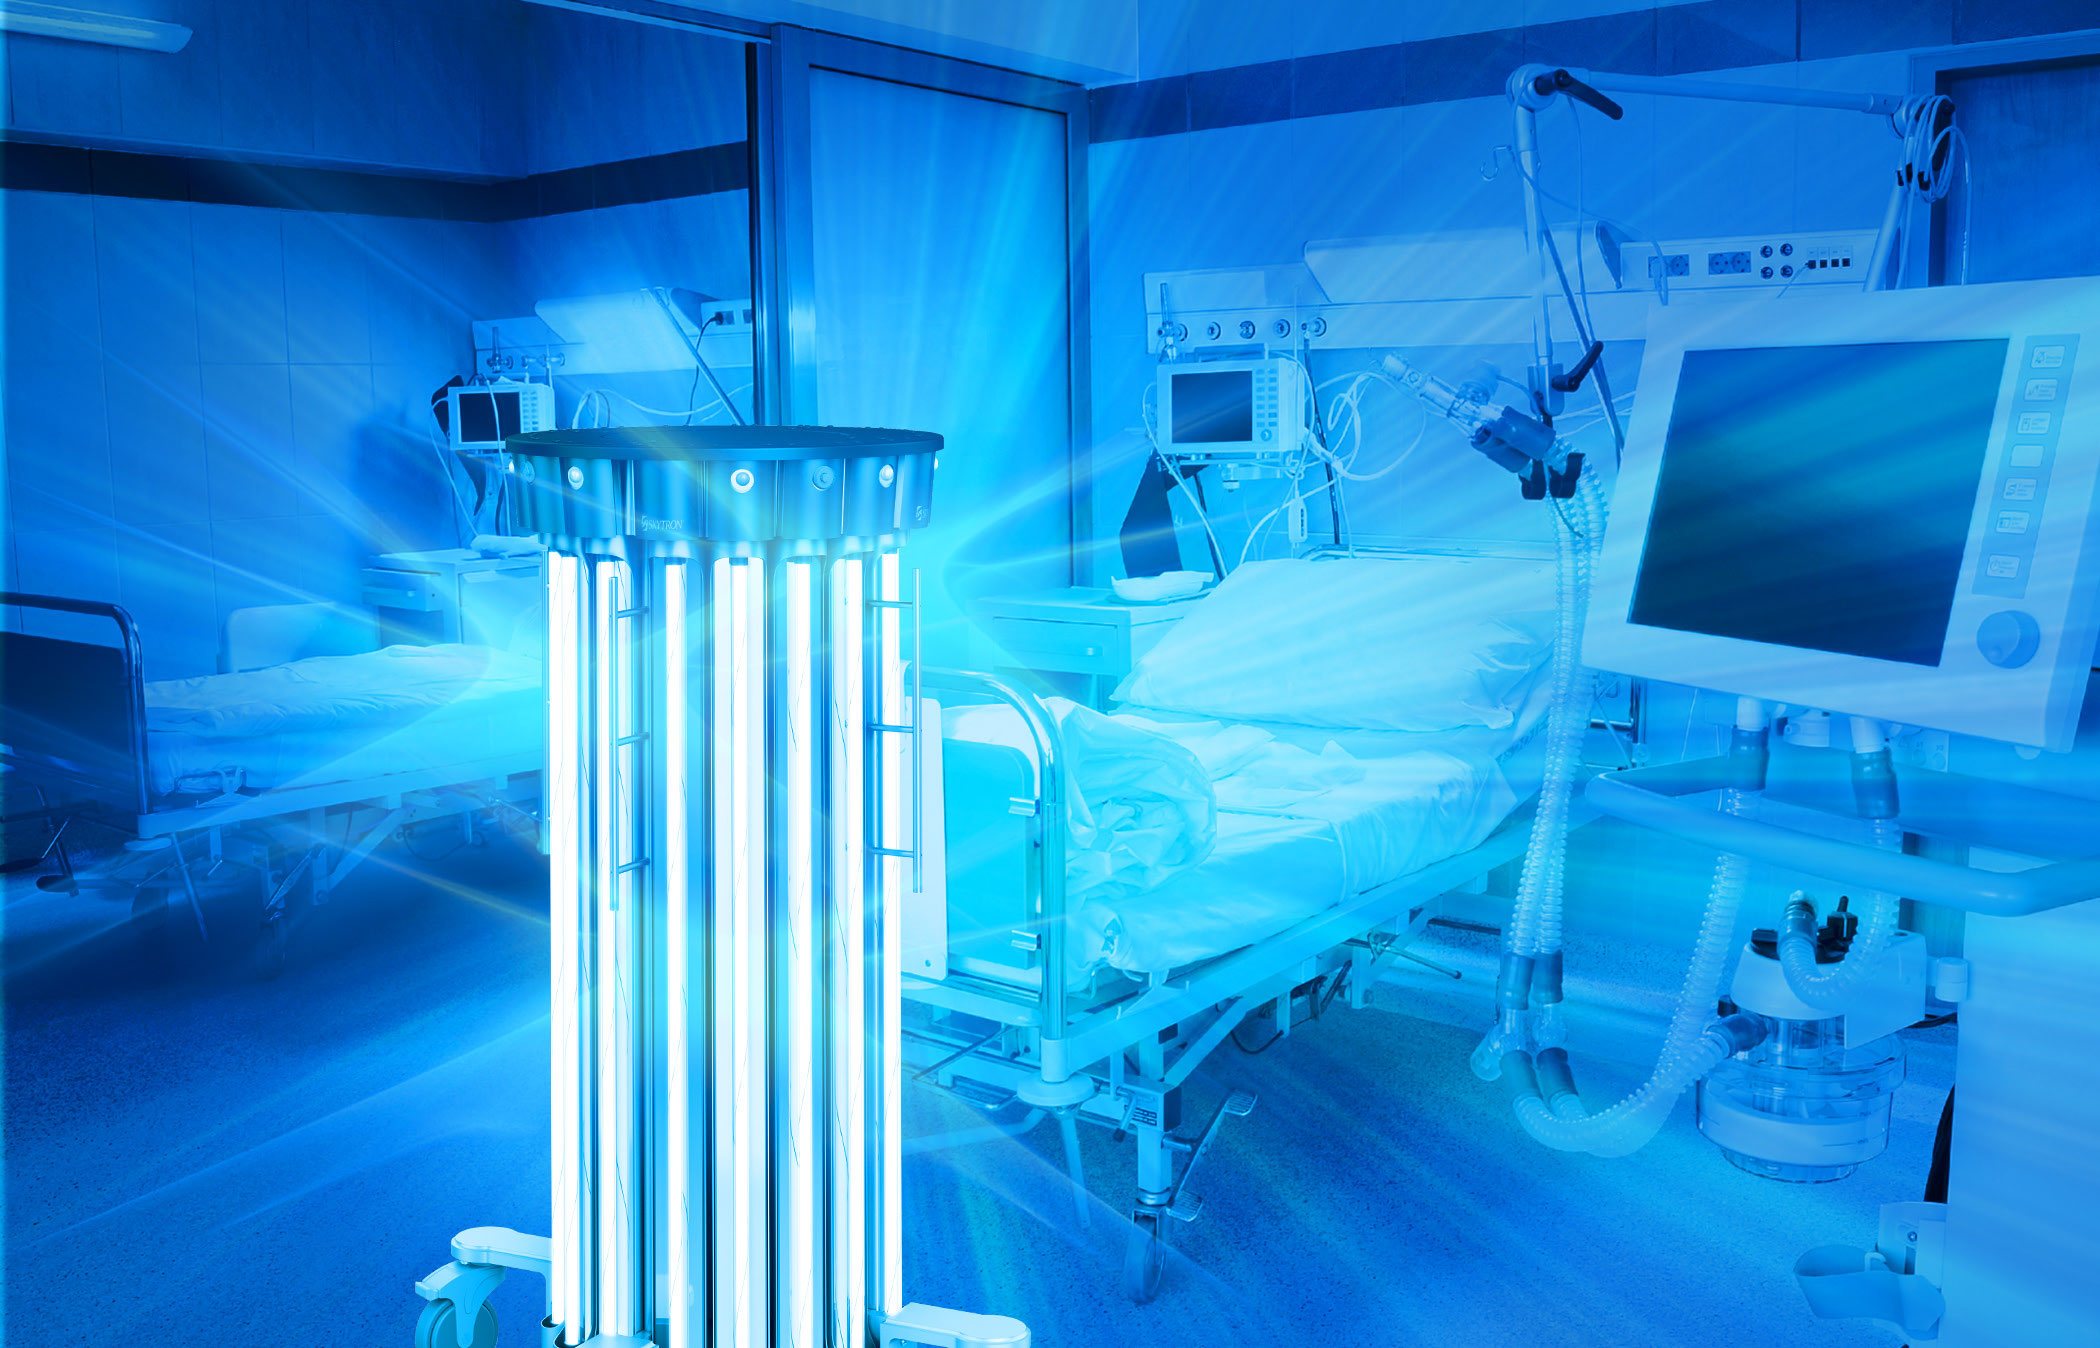 Does UV light kill germs? MUVGI-8 (UV-C) against COVID-19 - Thalheimer